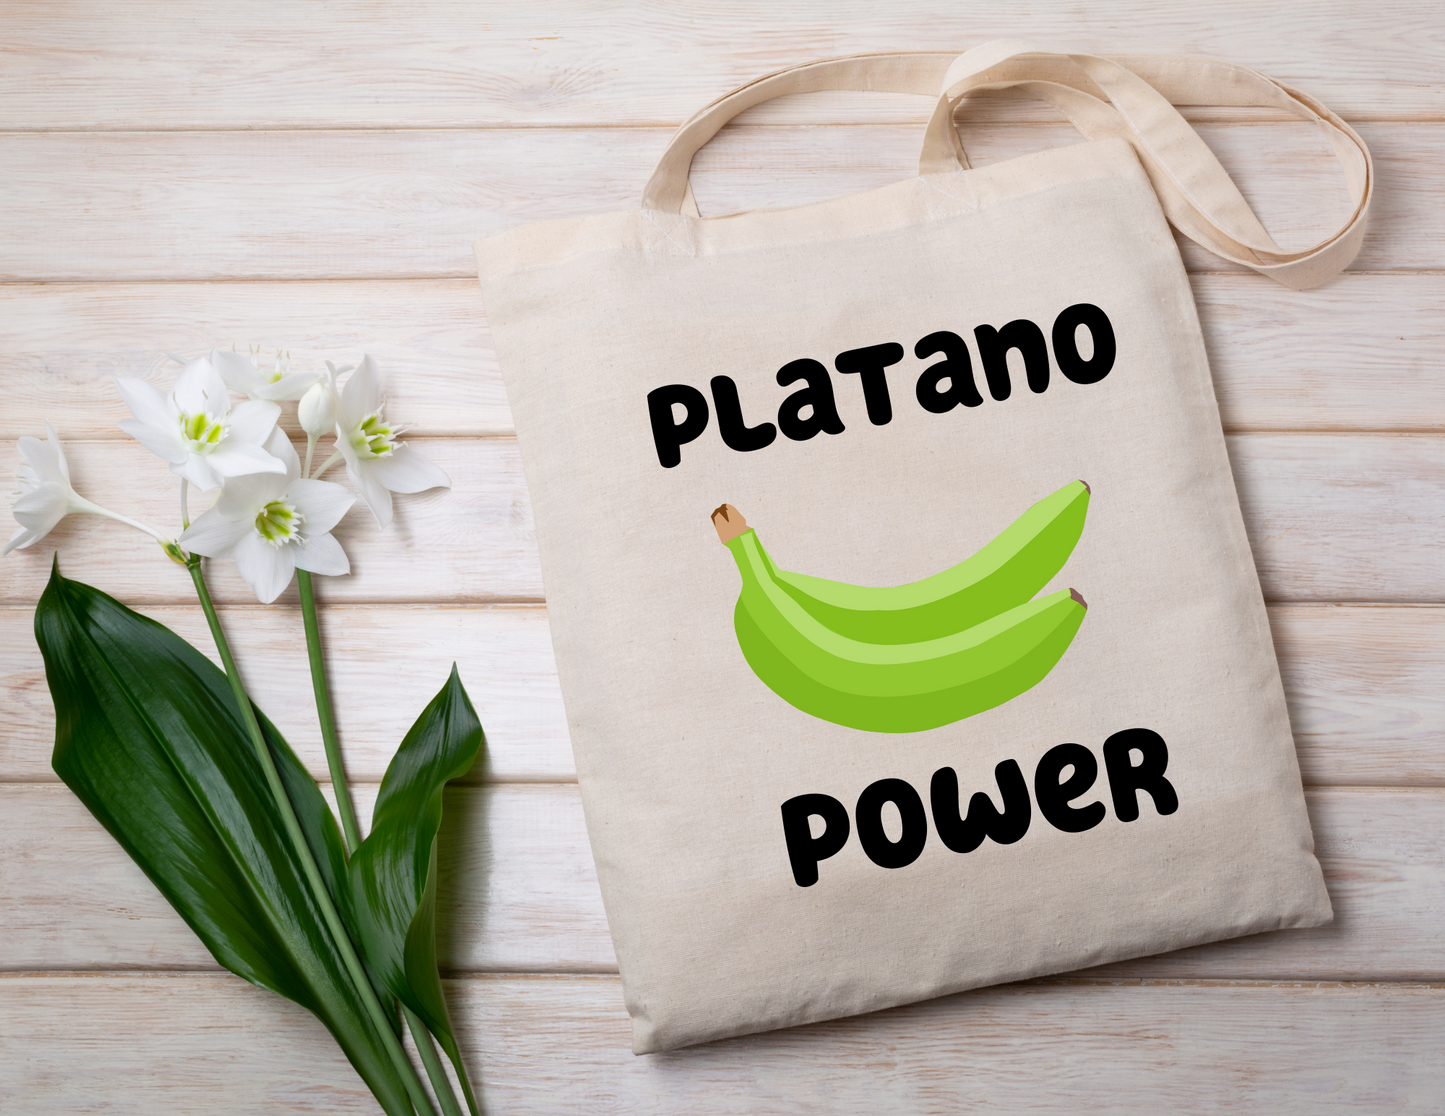 Platano Power Tote Bag